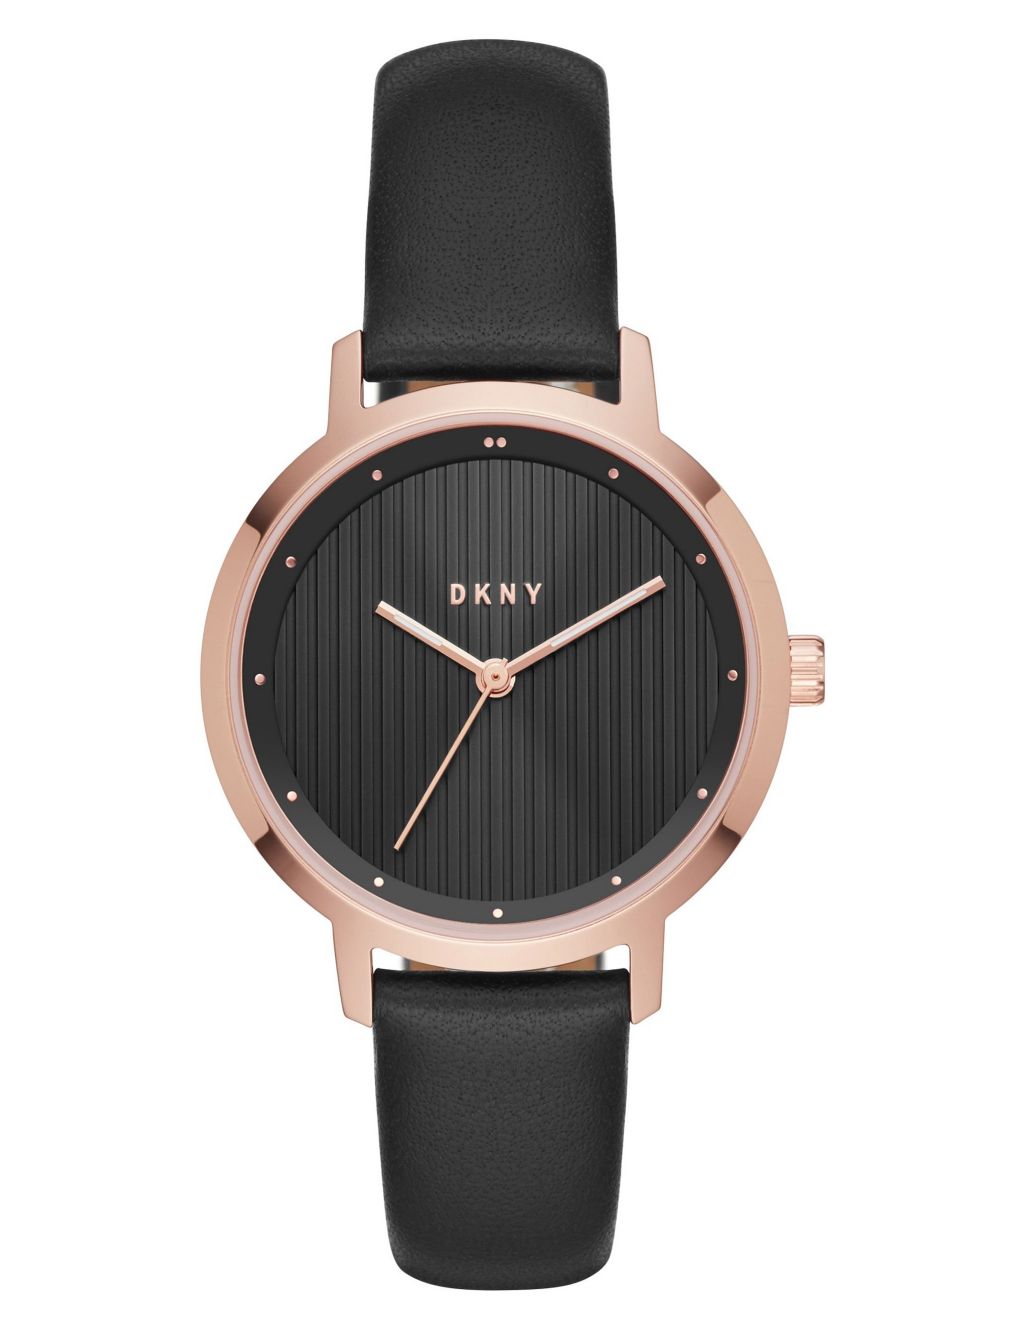 DKNY Modernist Black Leather Analogue Quartz Watch image 1